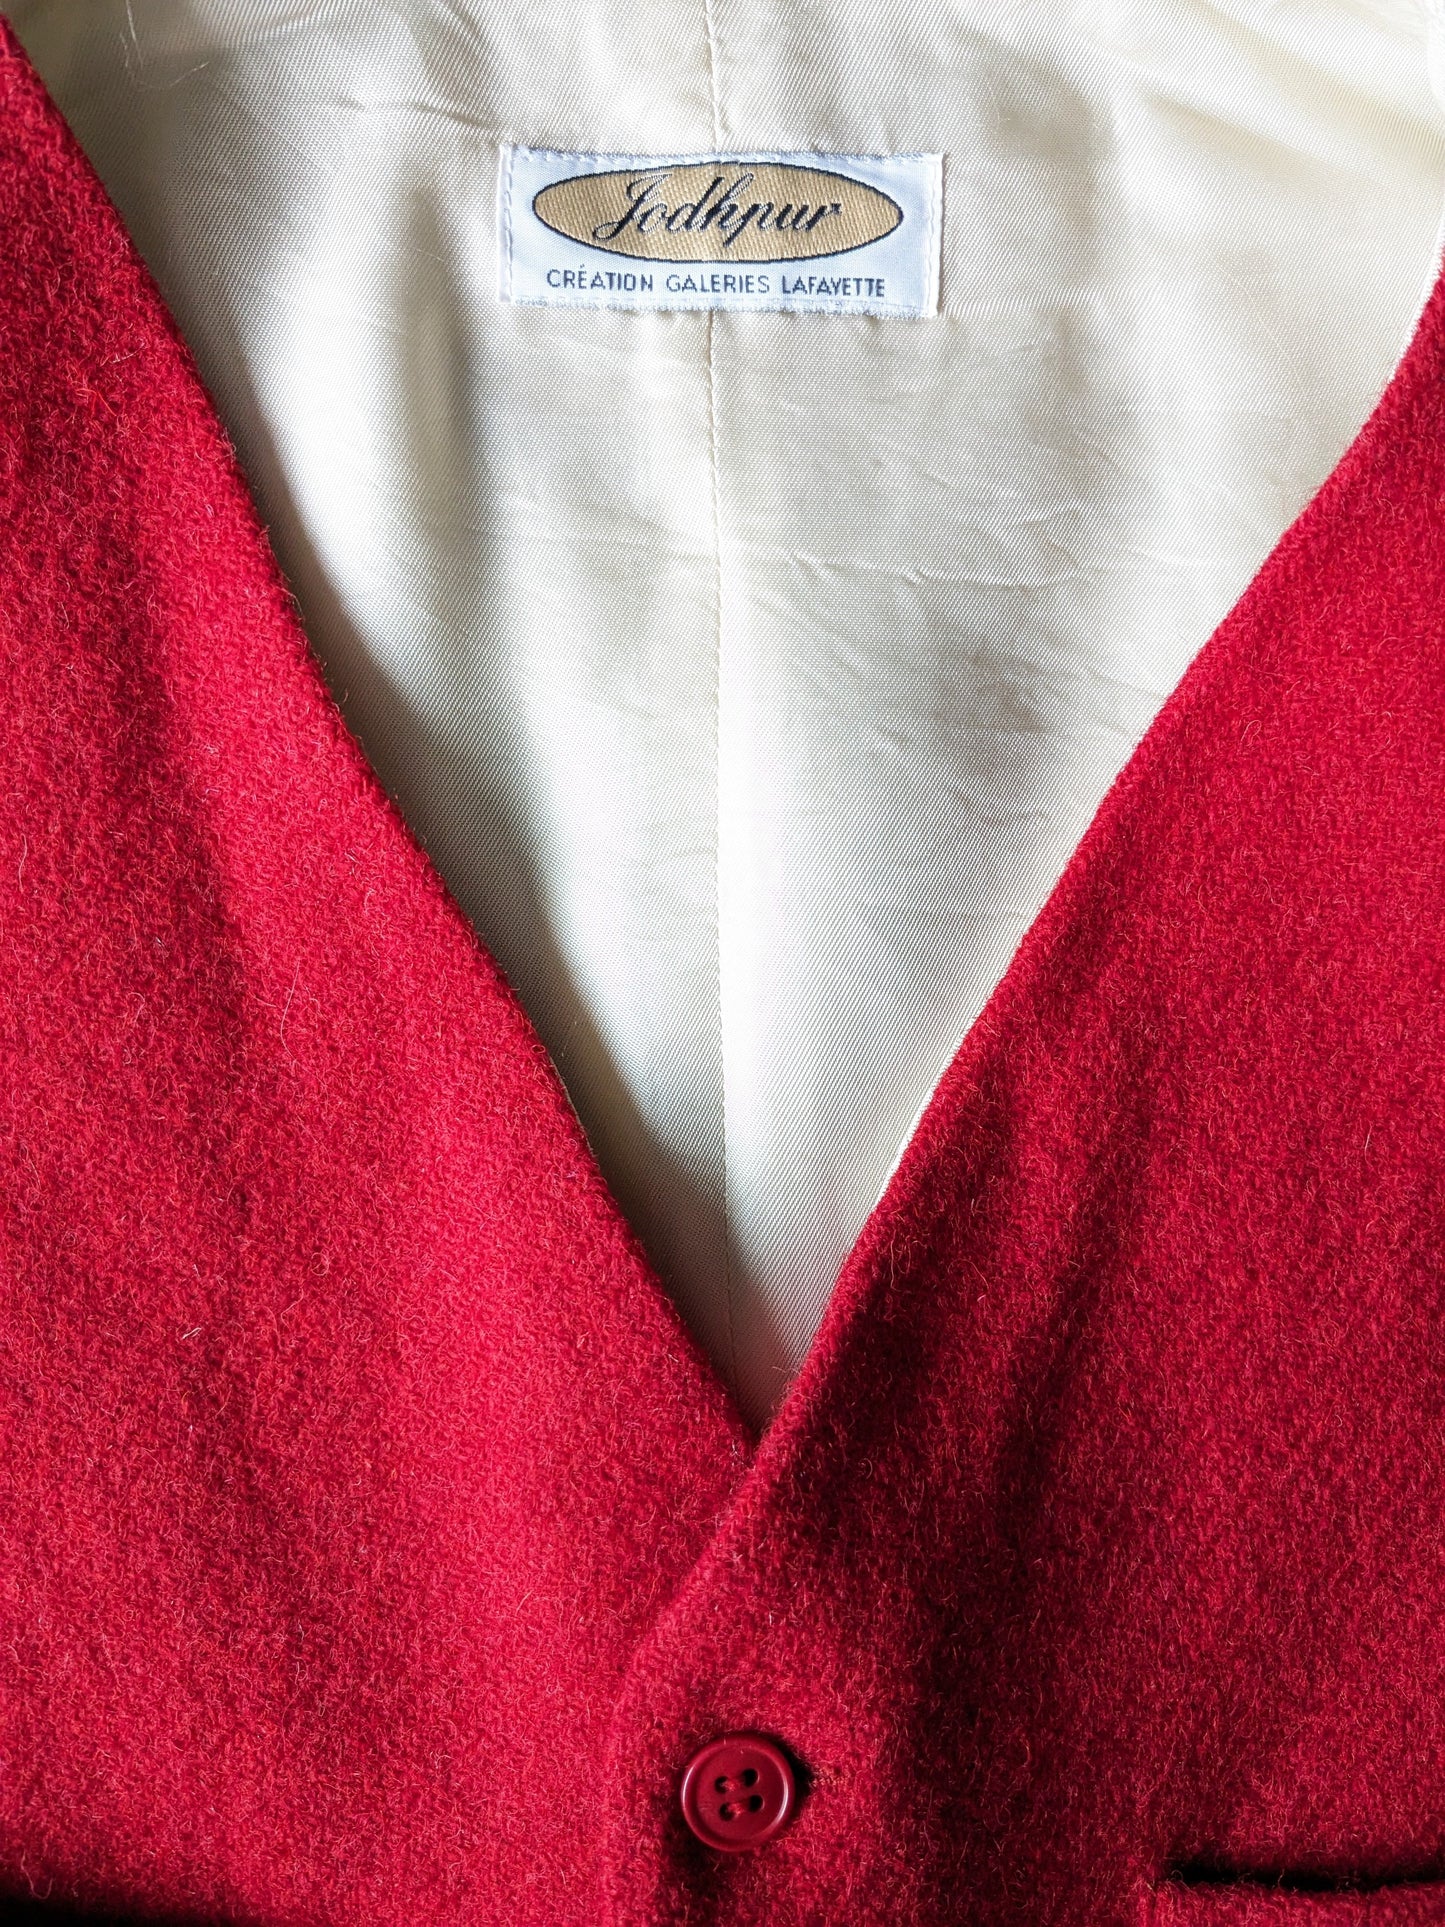 Vintage Jodhpur Woolen Gilet. Colored red. Size M.